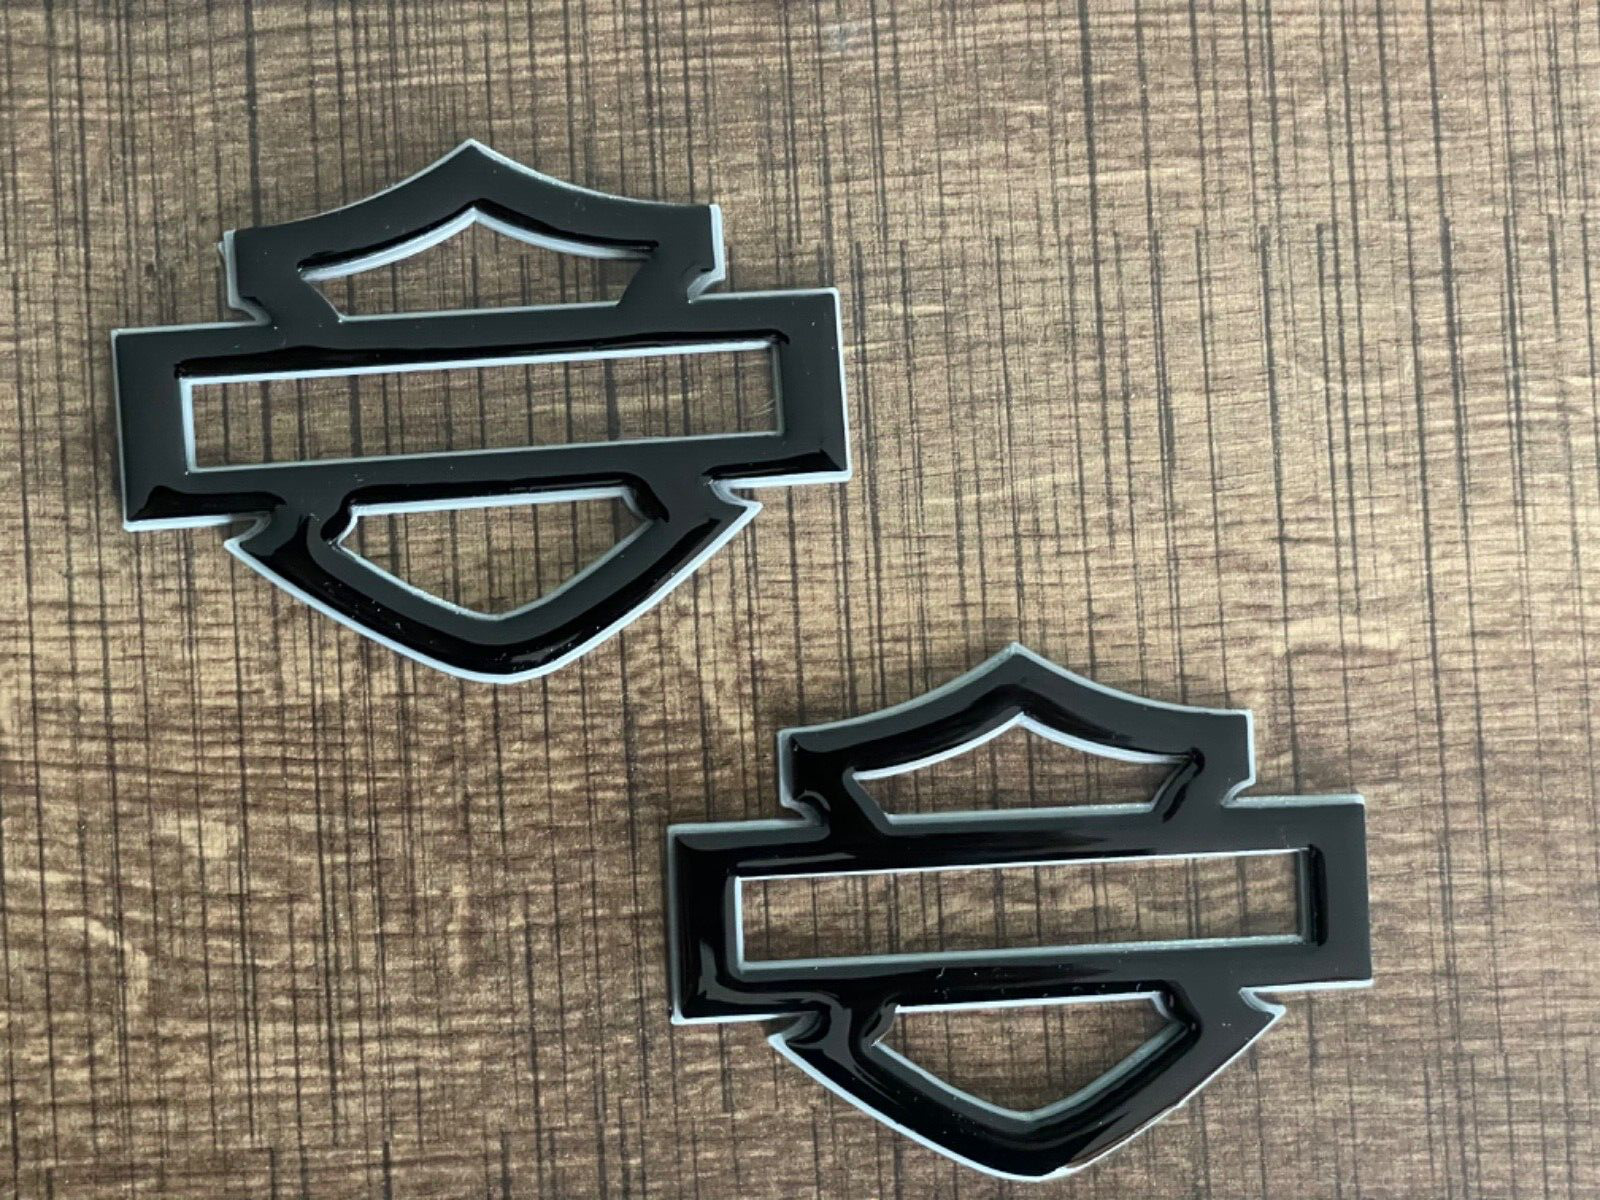 Harley Davidson Emblems, 2 pcs, Grey&Black, Fuel Gas Tank Emblems Badge!